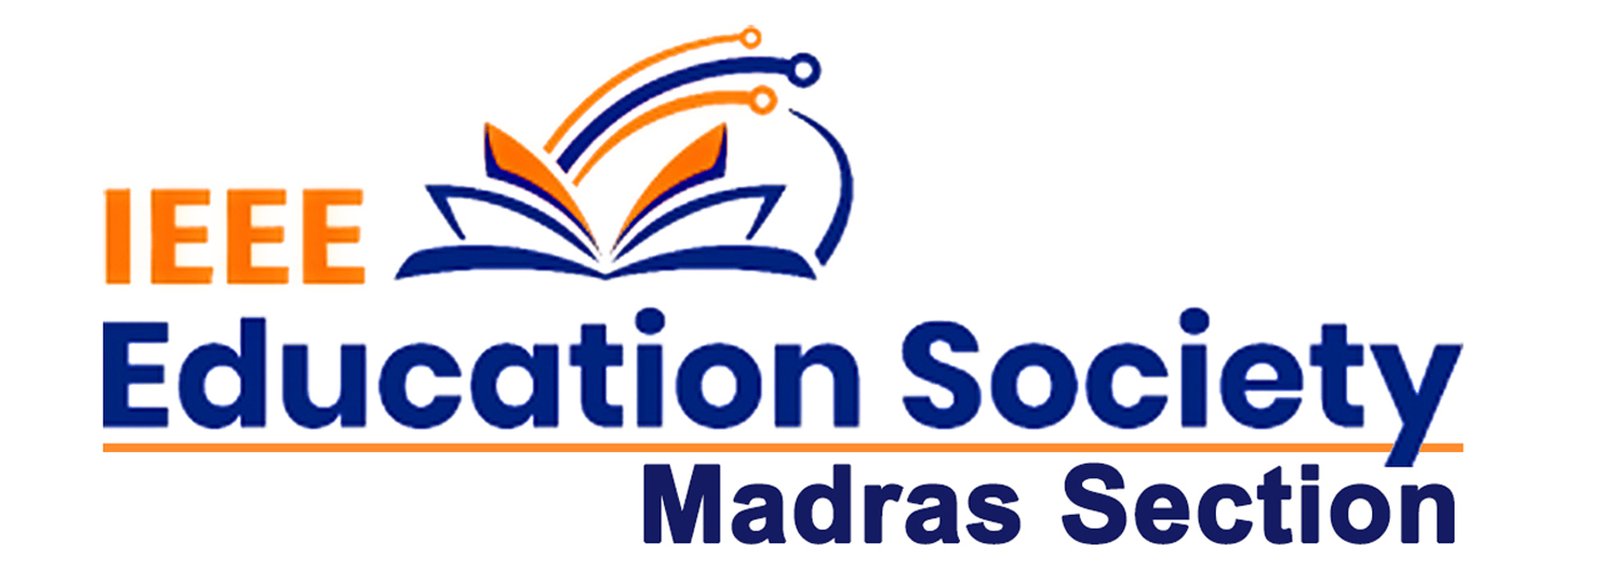 Education Society - Madras Section (1)